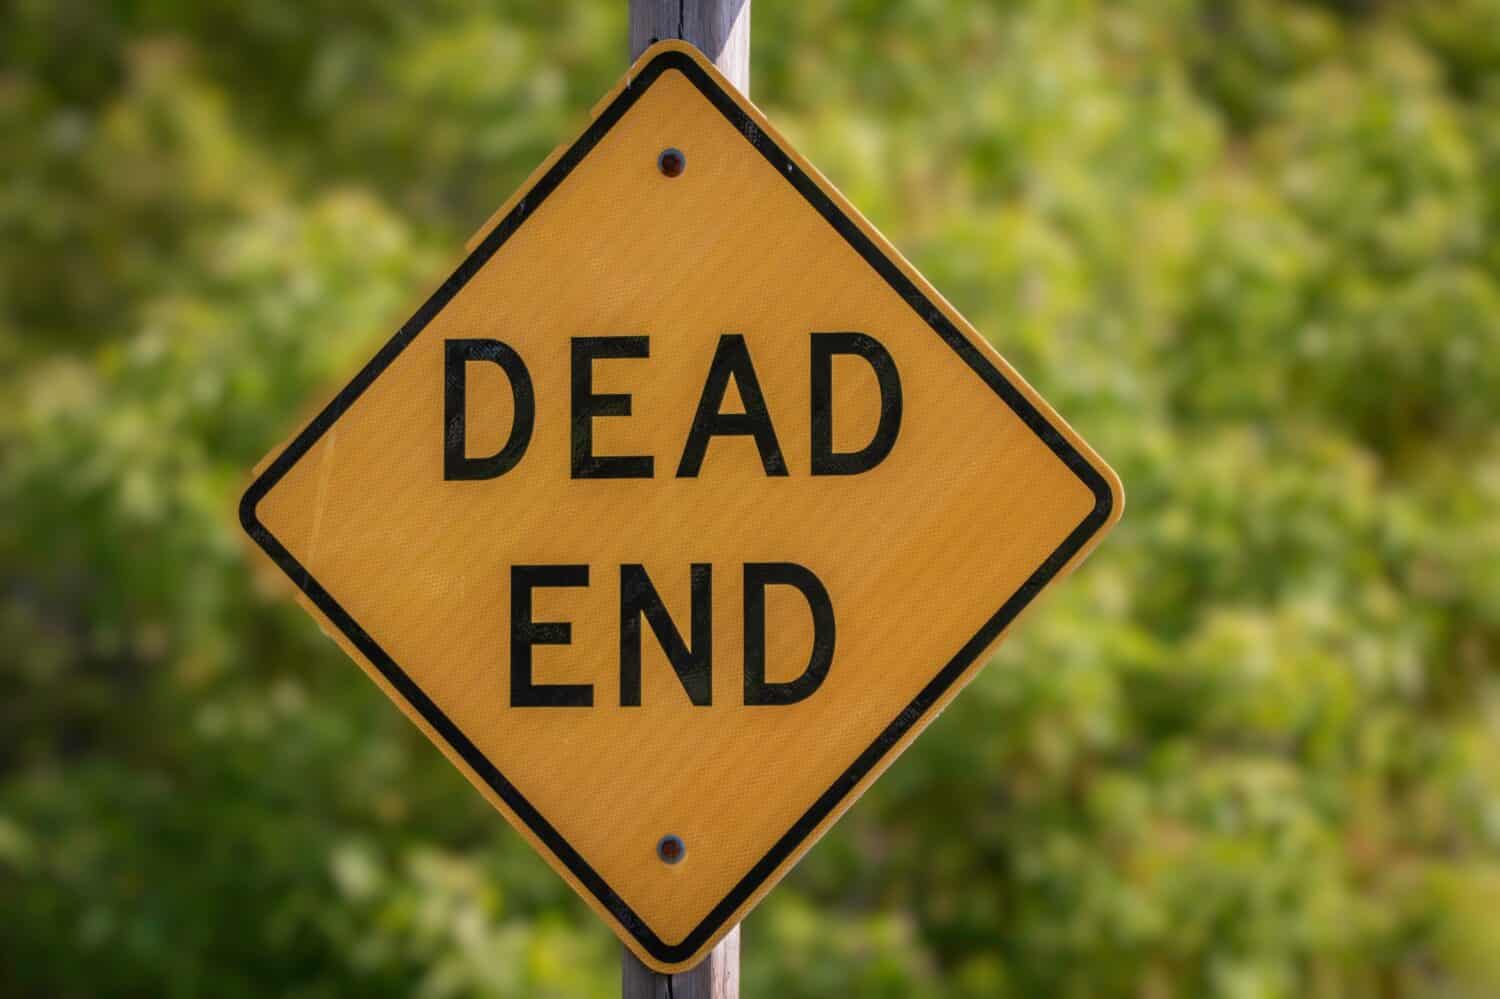 Dead end road sign, traffic sign